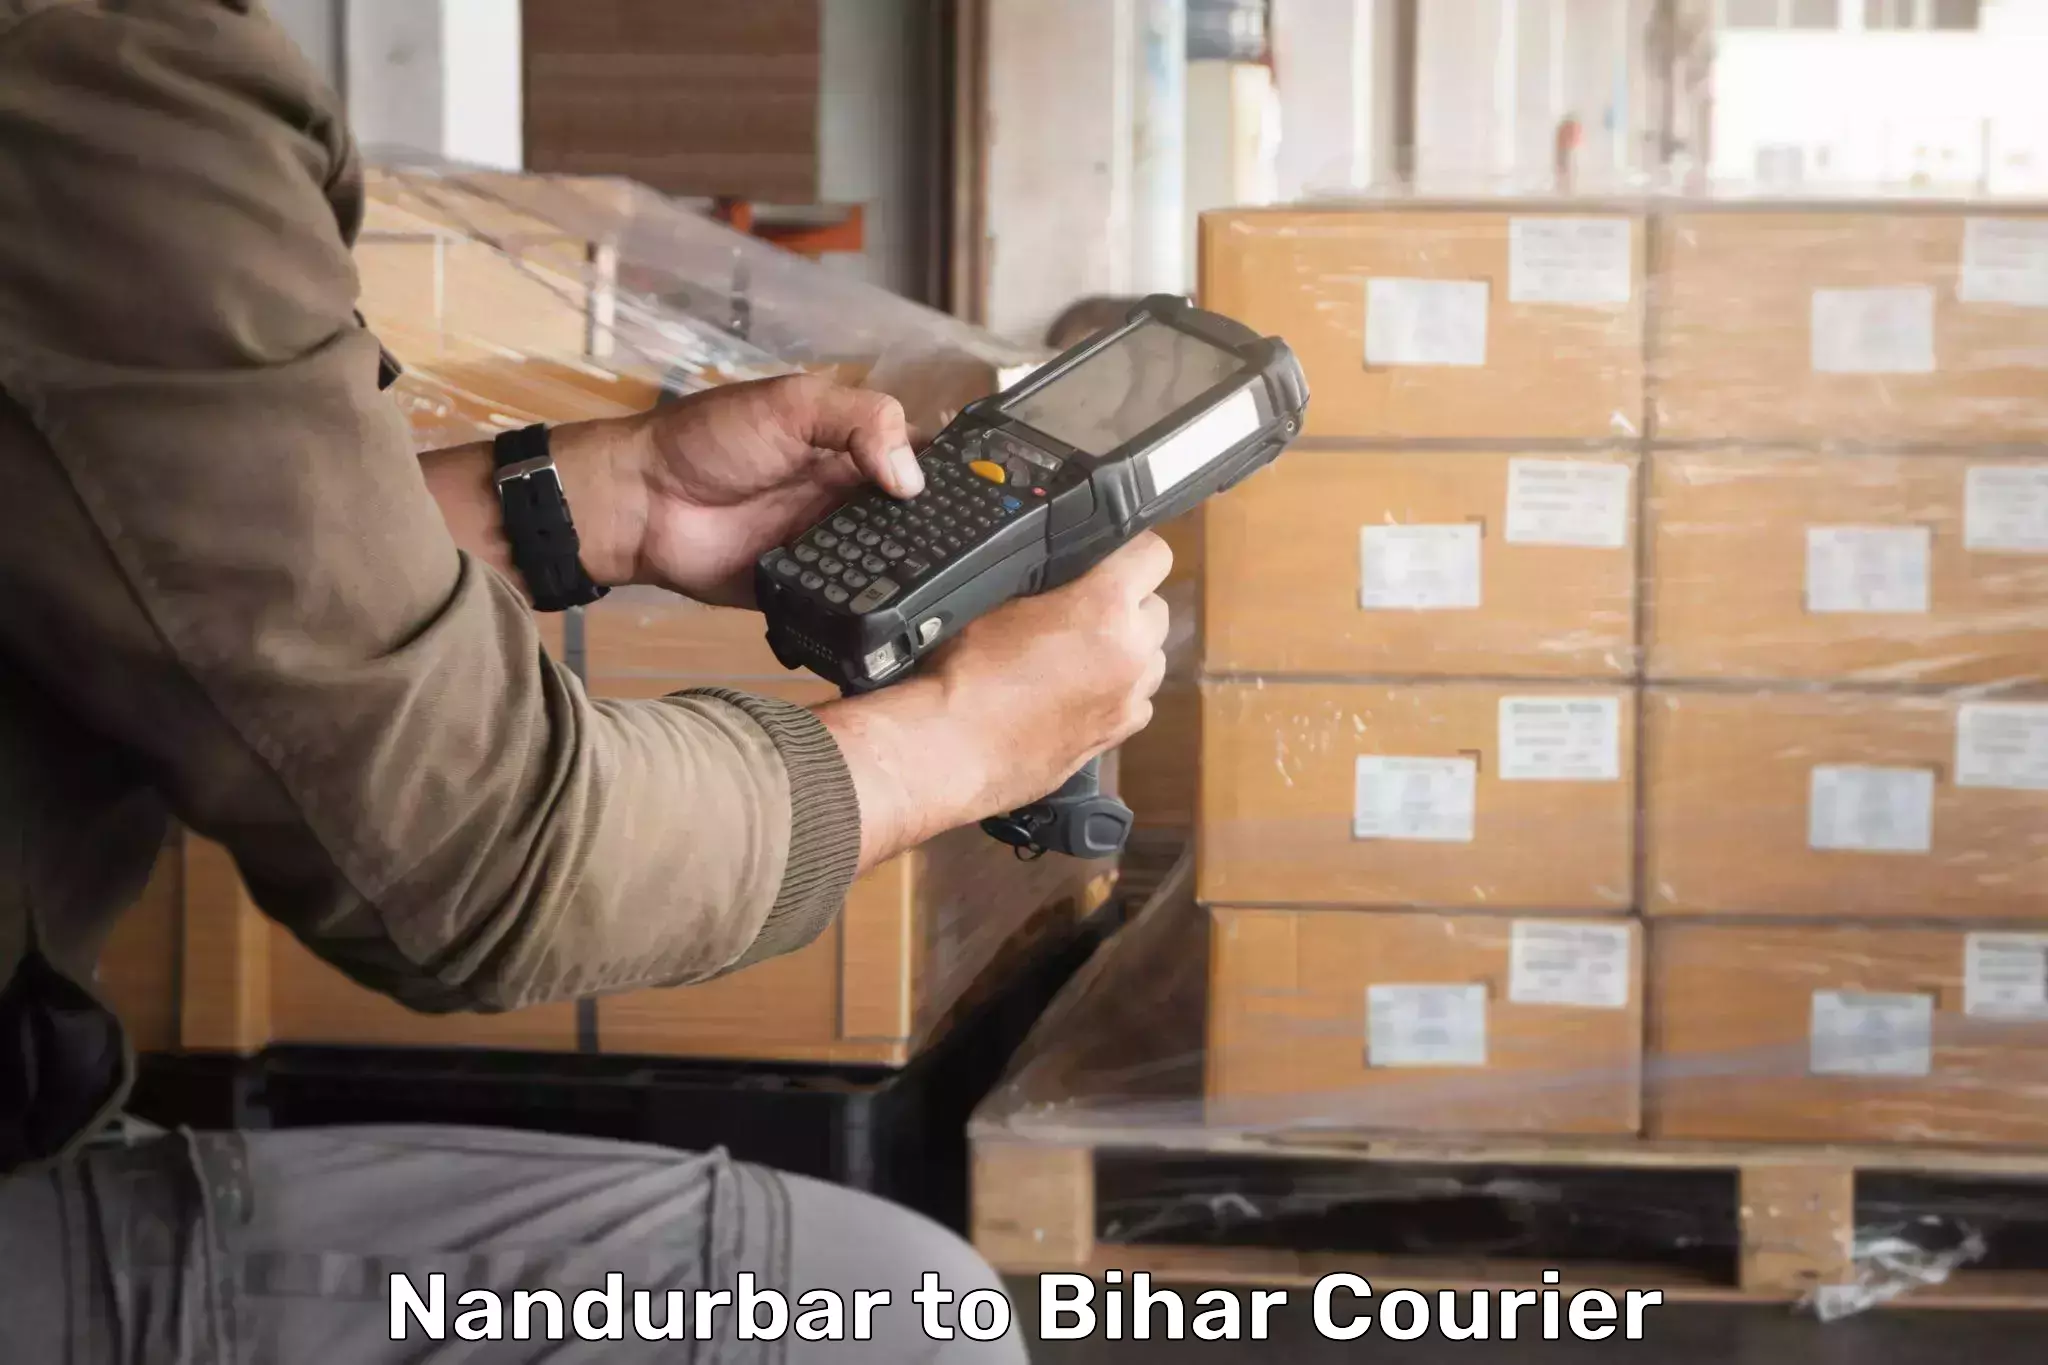 Global logistics network Nandurbar to Buxar